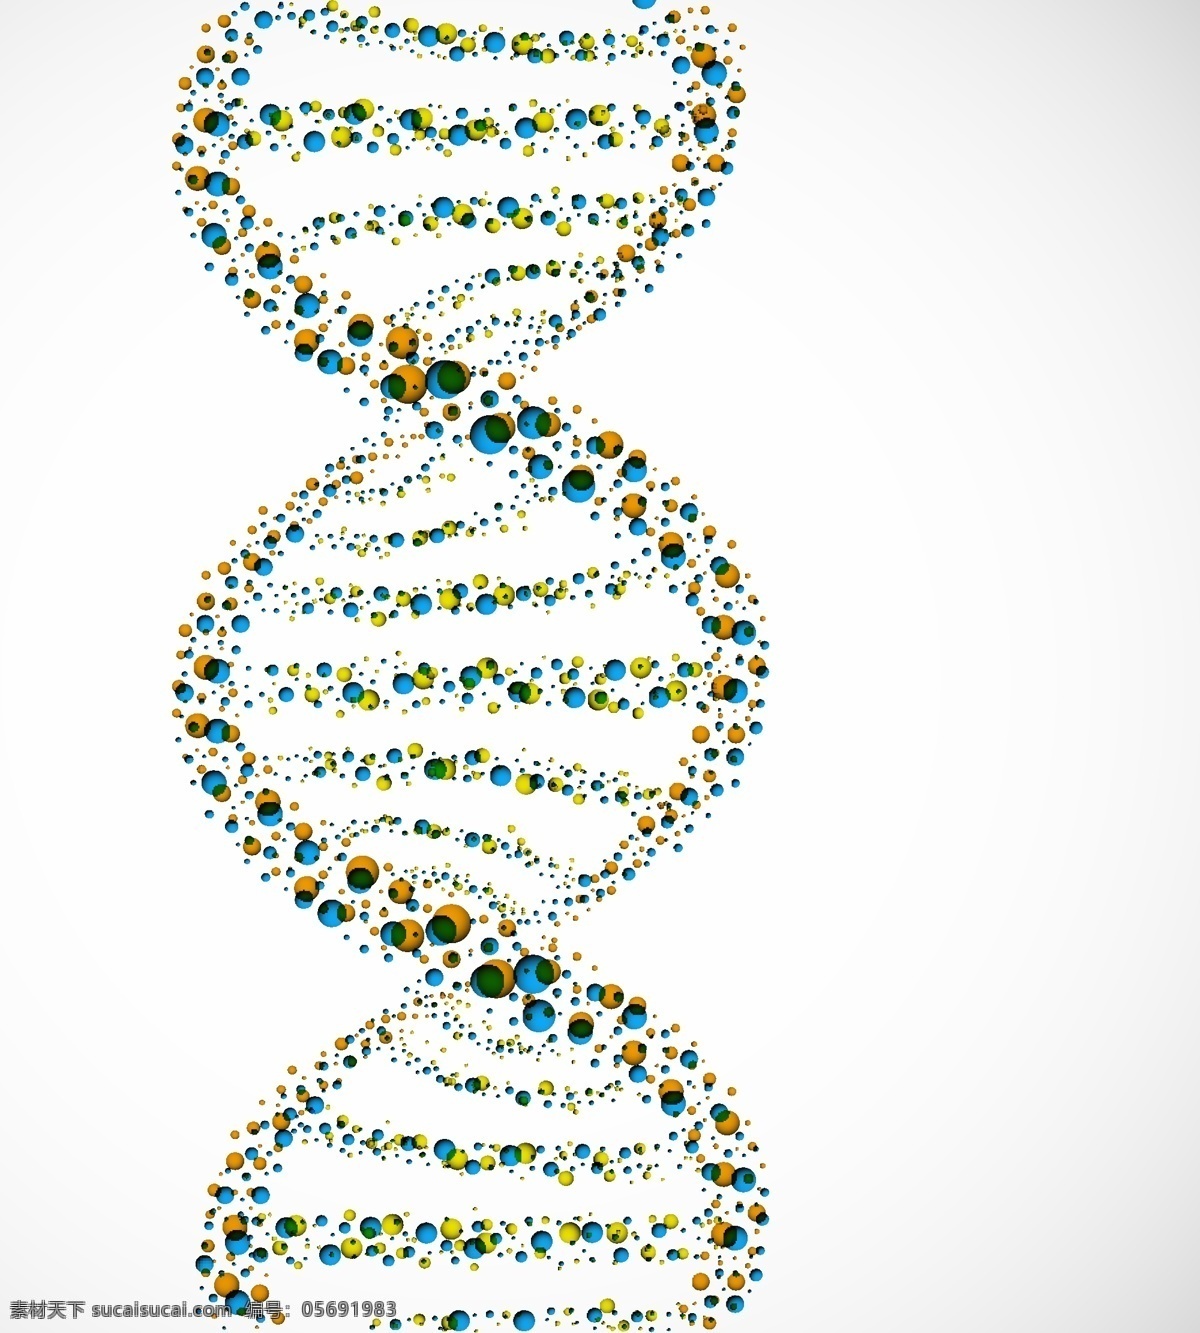 dna 遗传学 遗传 基因 医学 医疗科学 生物学 基因学 遗传医学 人类基因 基因结构 基因组织 时尚背景 绚丽背景 背景素材 背景图案 矢量背景 背景设计 抽象背景 抽象 医疗保健 生活百科 矢量